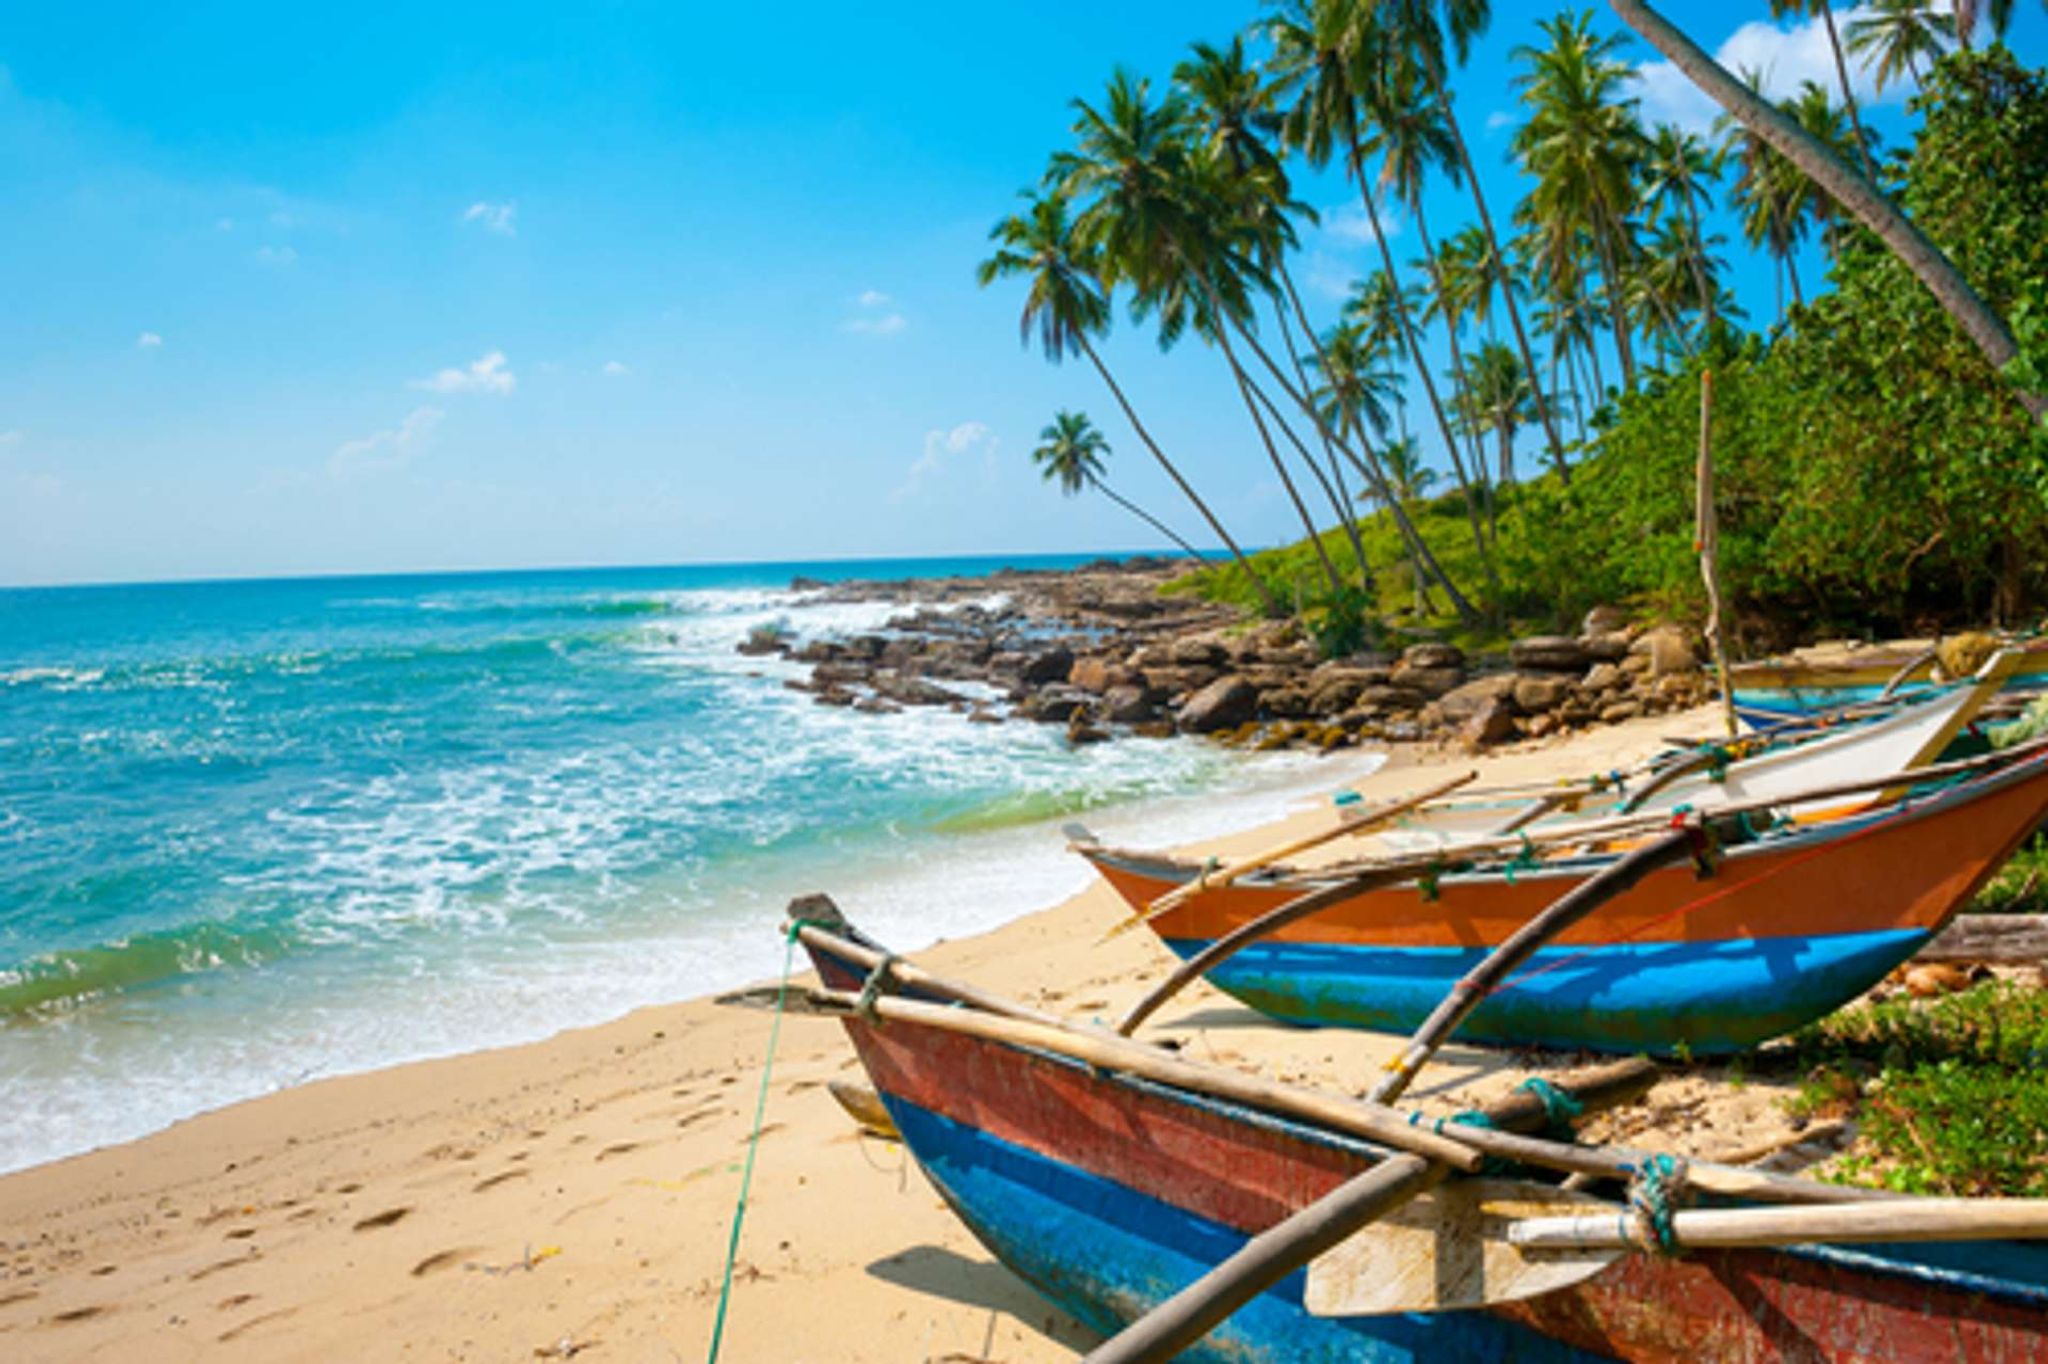 Sri Lanka beach with palms and fishing boats